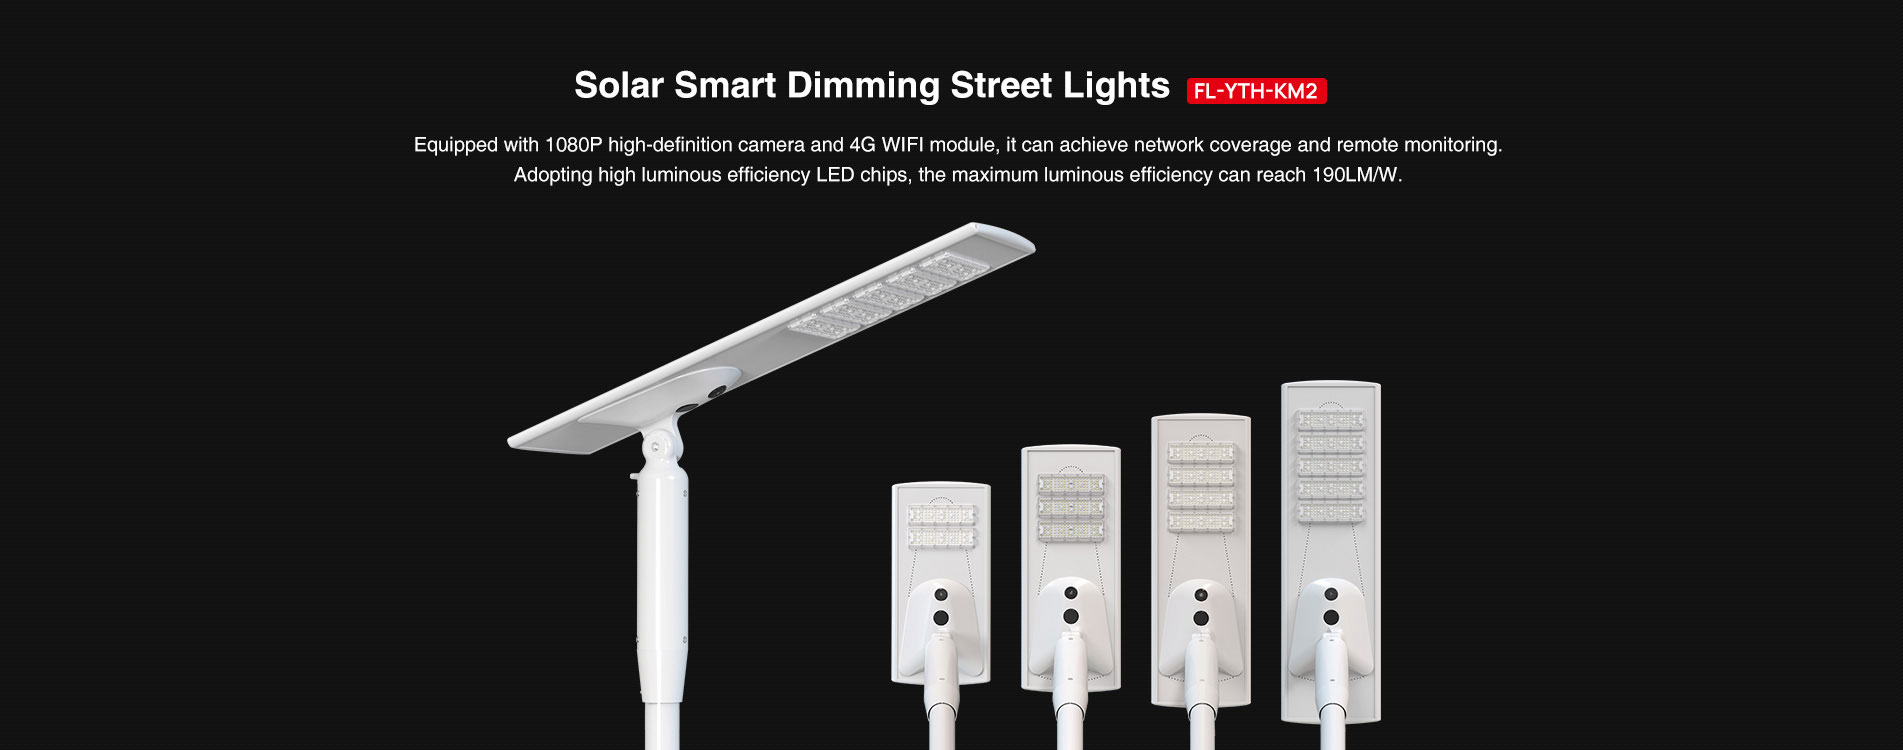 FL-YTH-KM2 Smart Solar Street Light